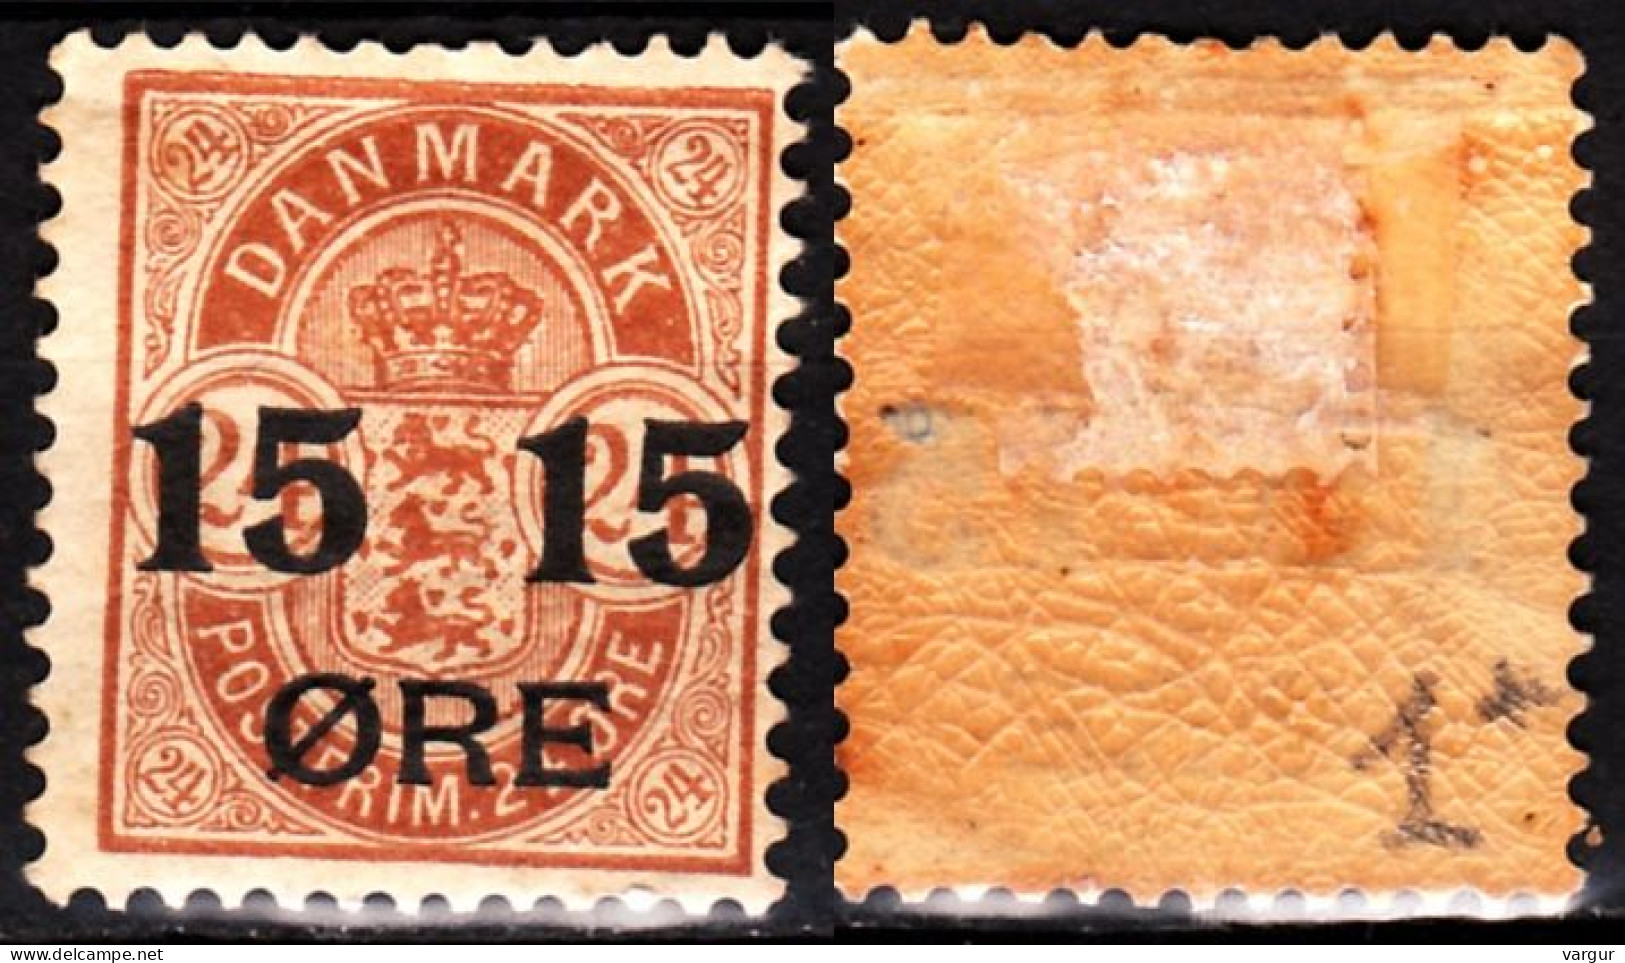 DENMARK 1904 Definitive: Surcharge 15 Ore On 4o, MHOG #1 - Neufs